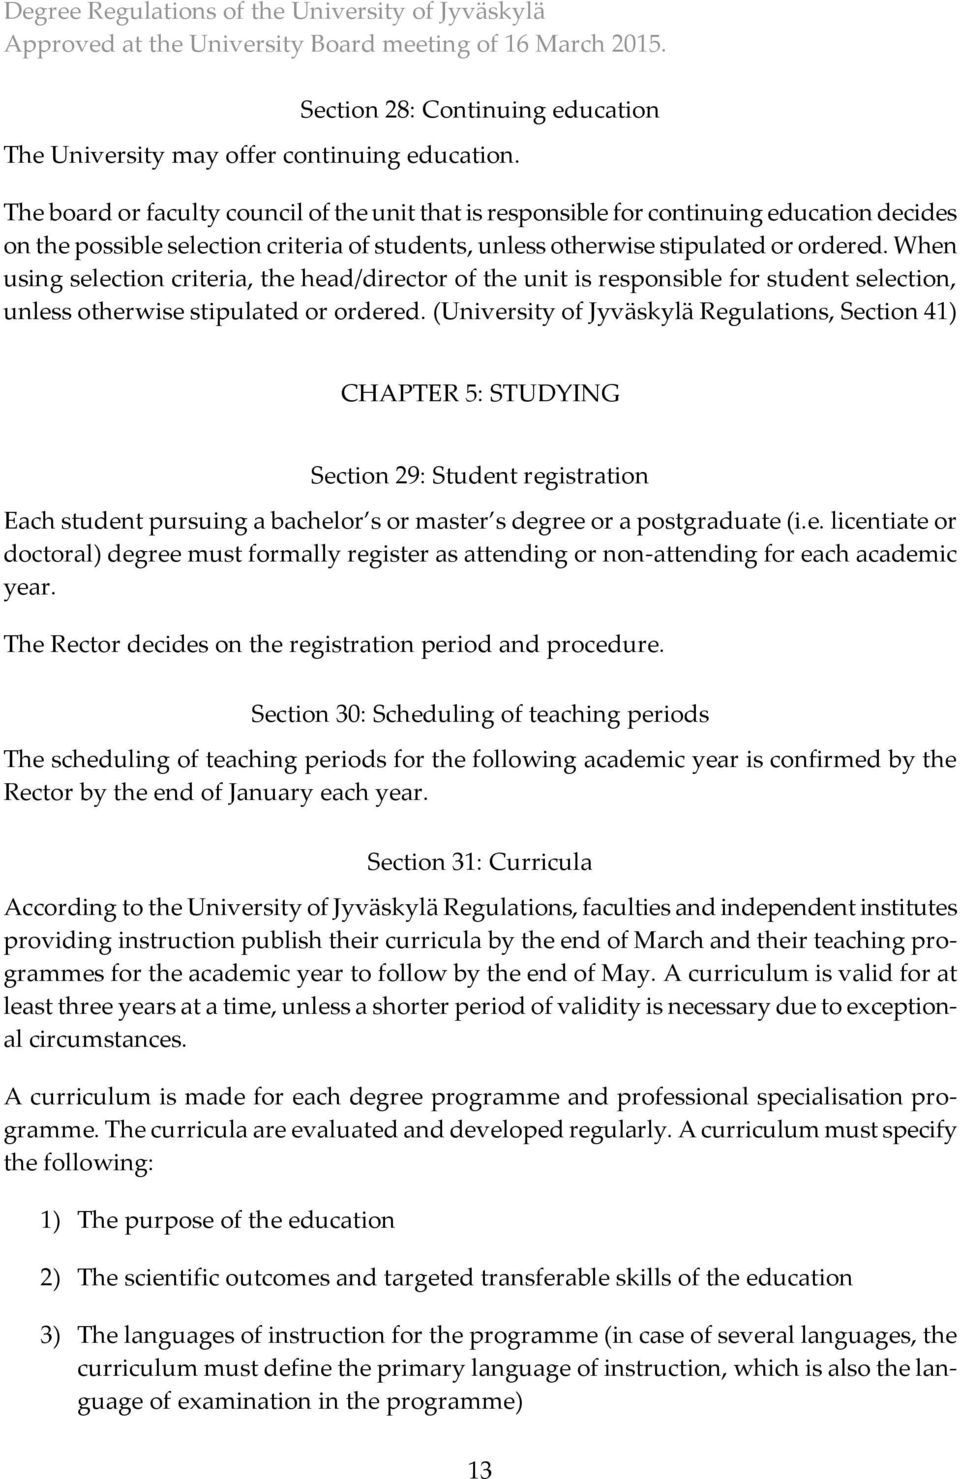 degree regulations of the university of jyvÄskylÄ - pdf